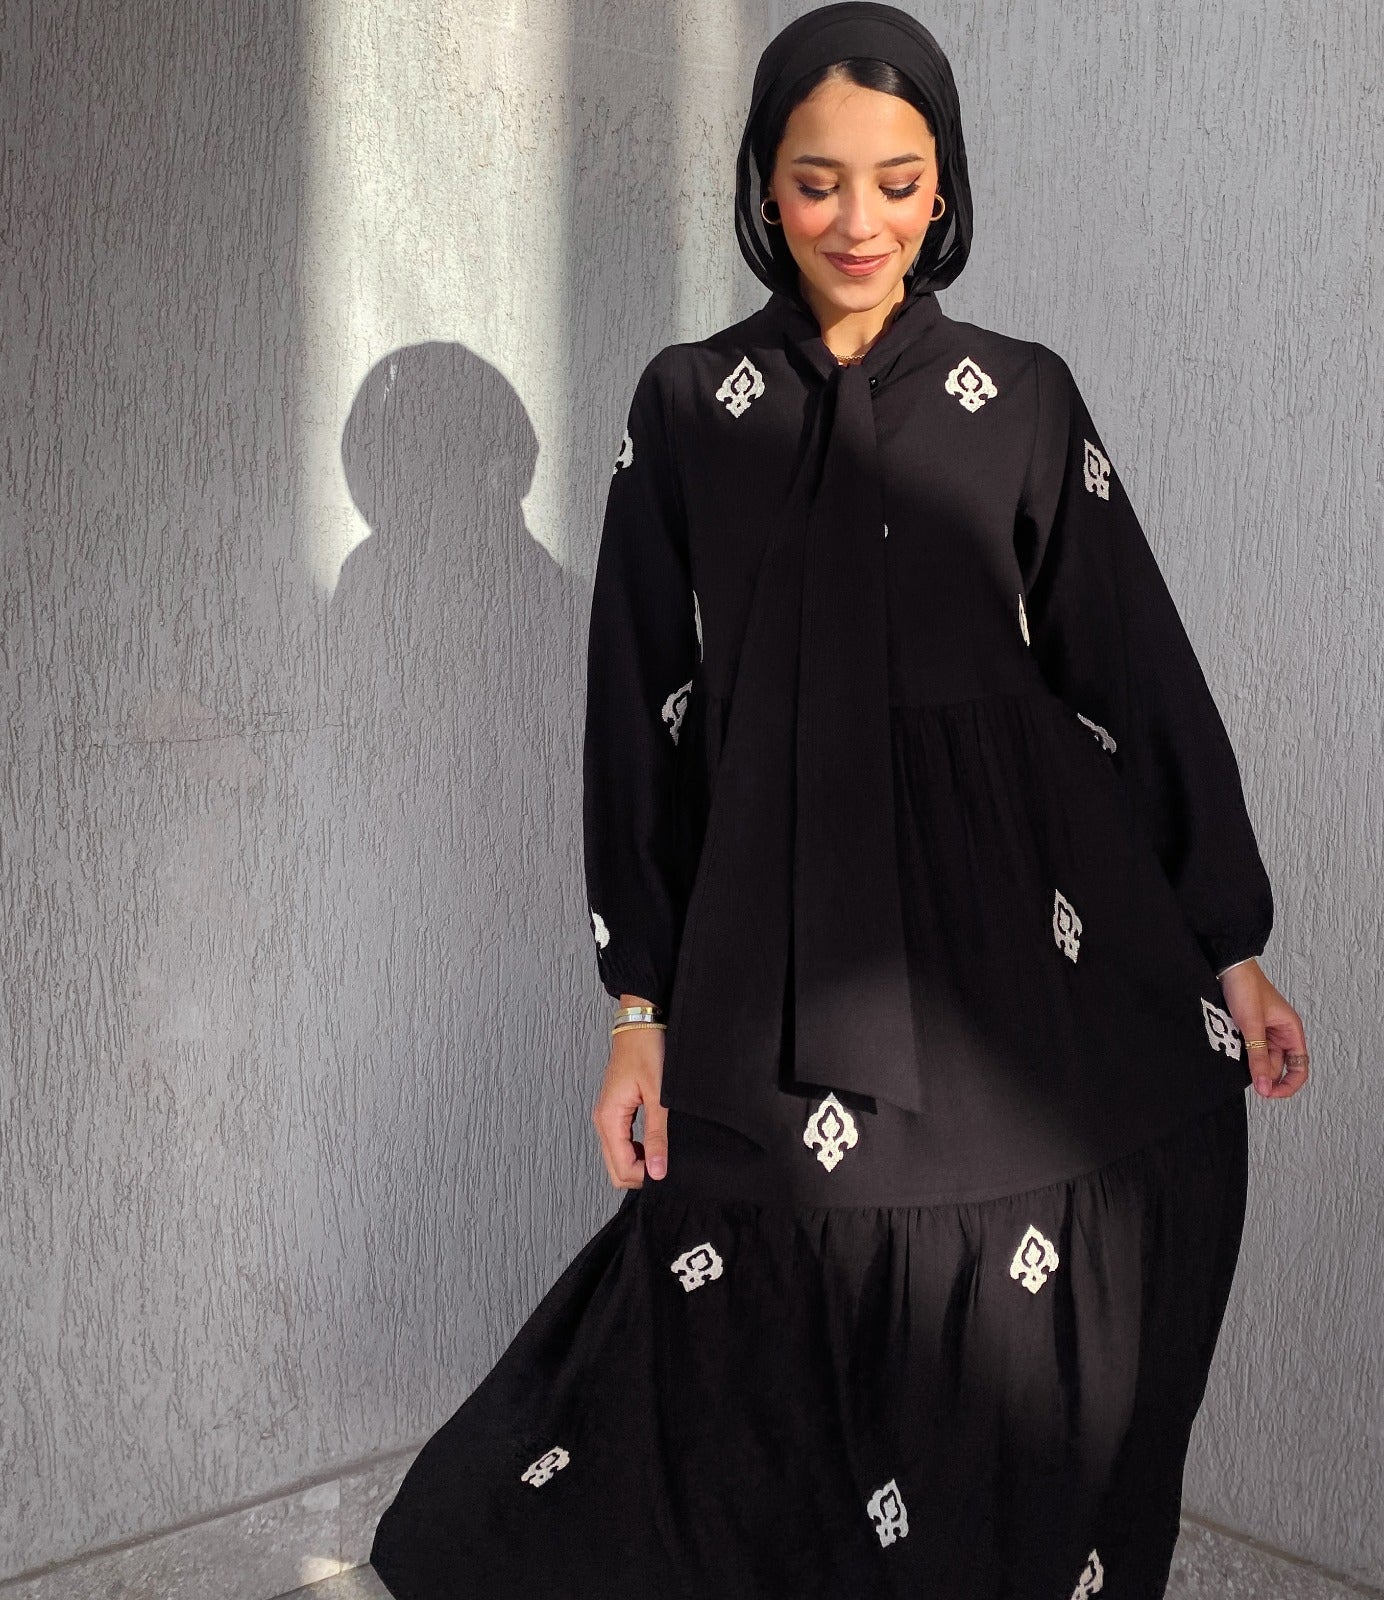 Arabesque Dress Black